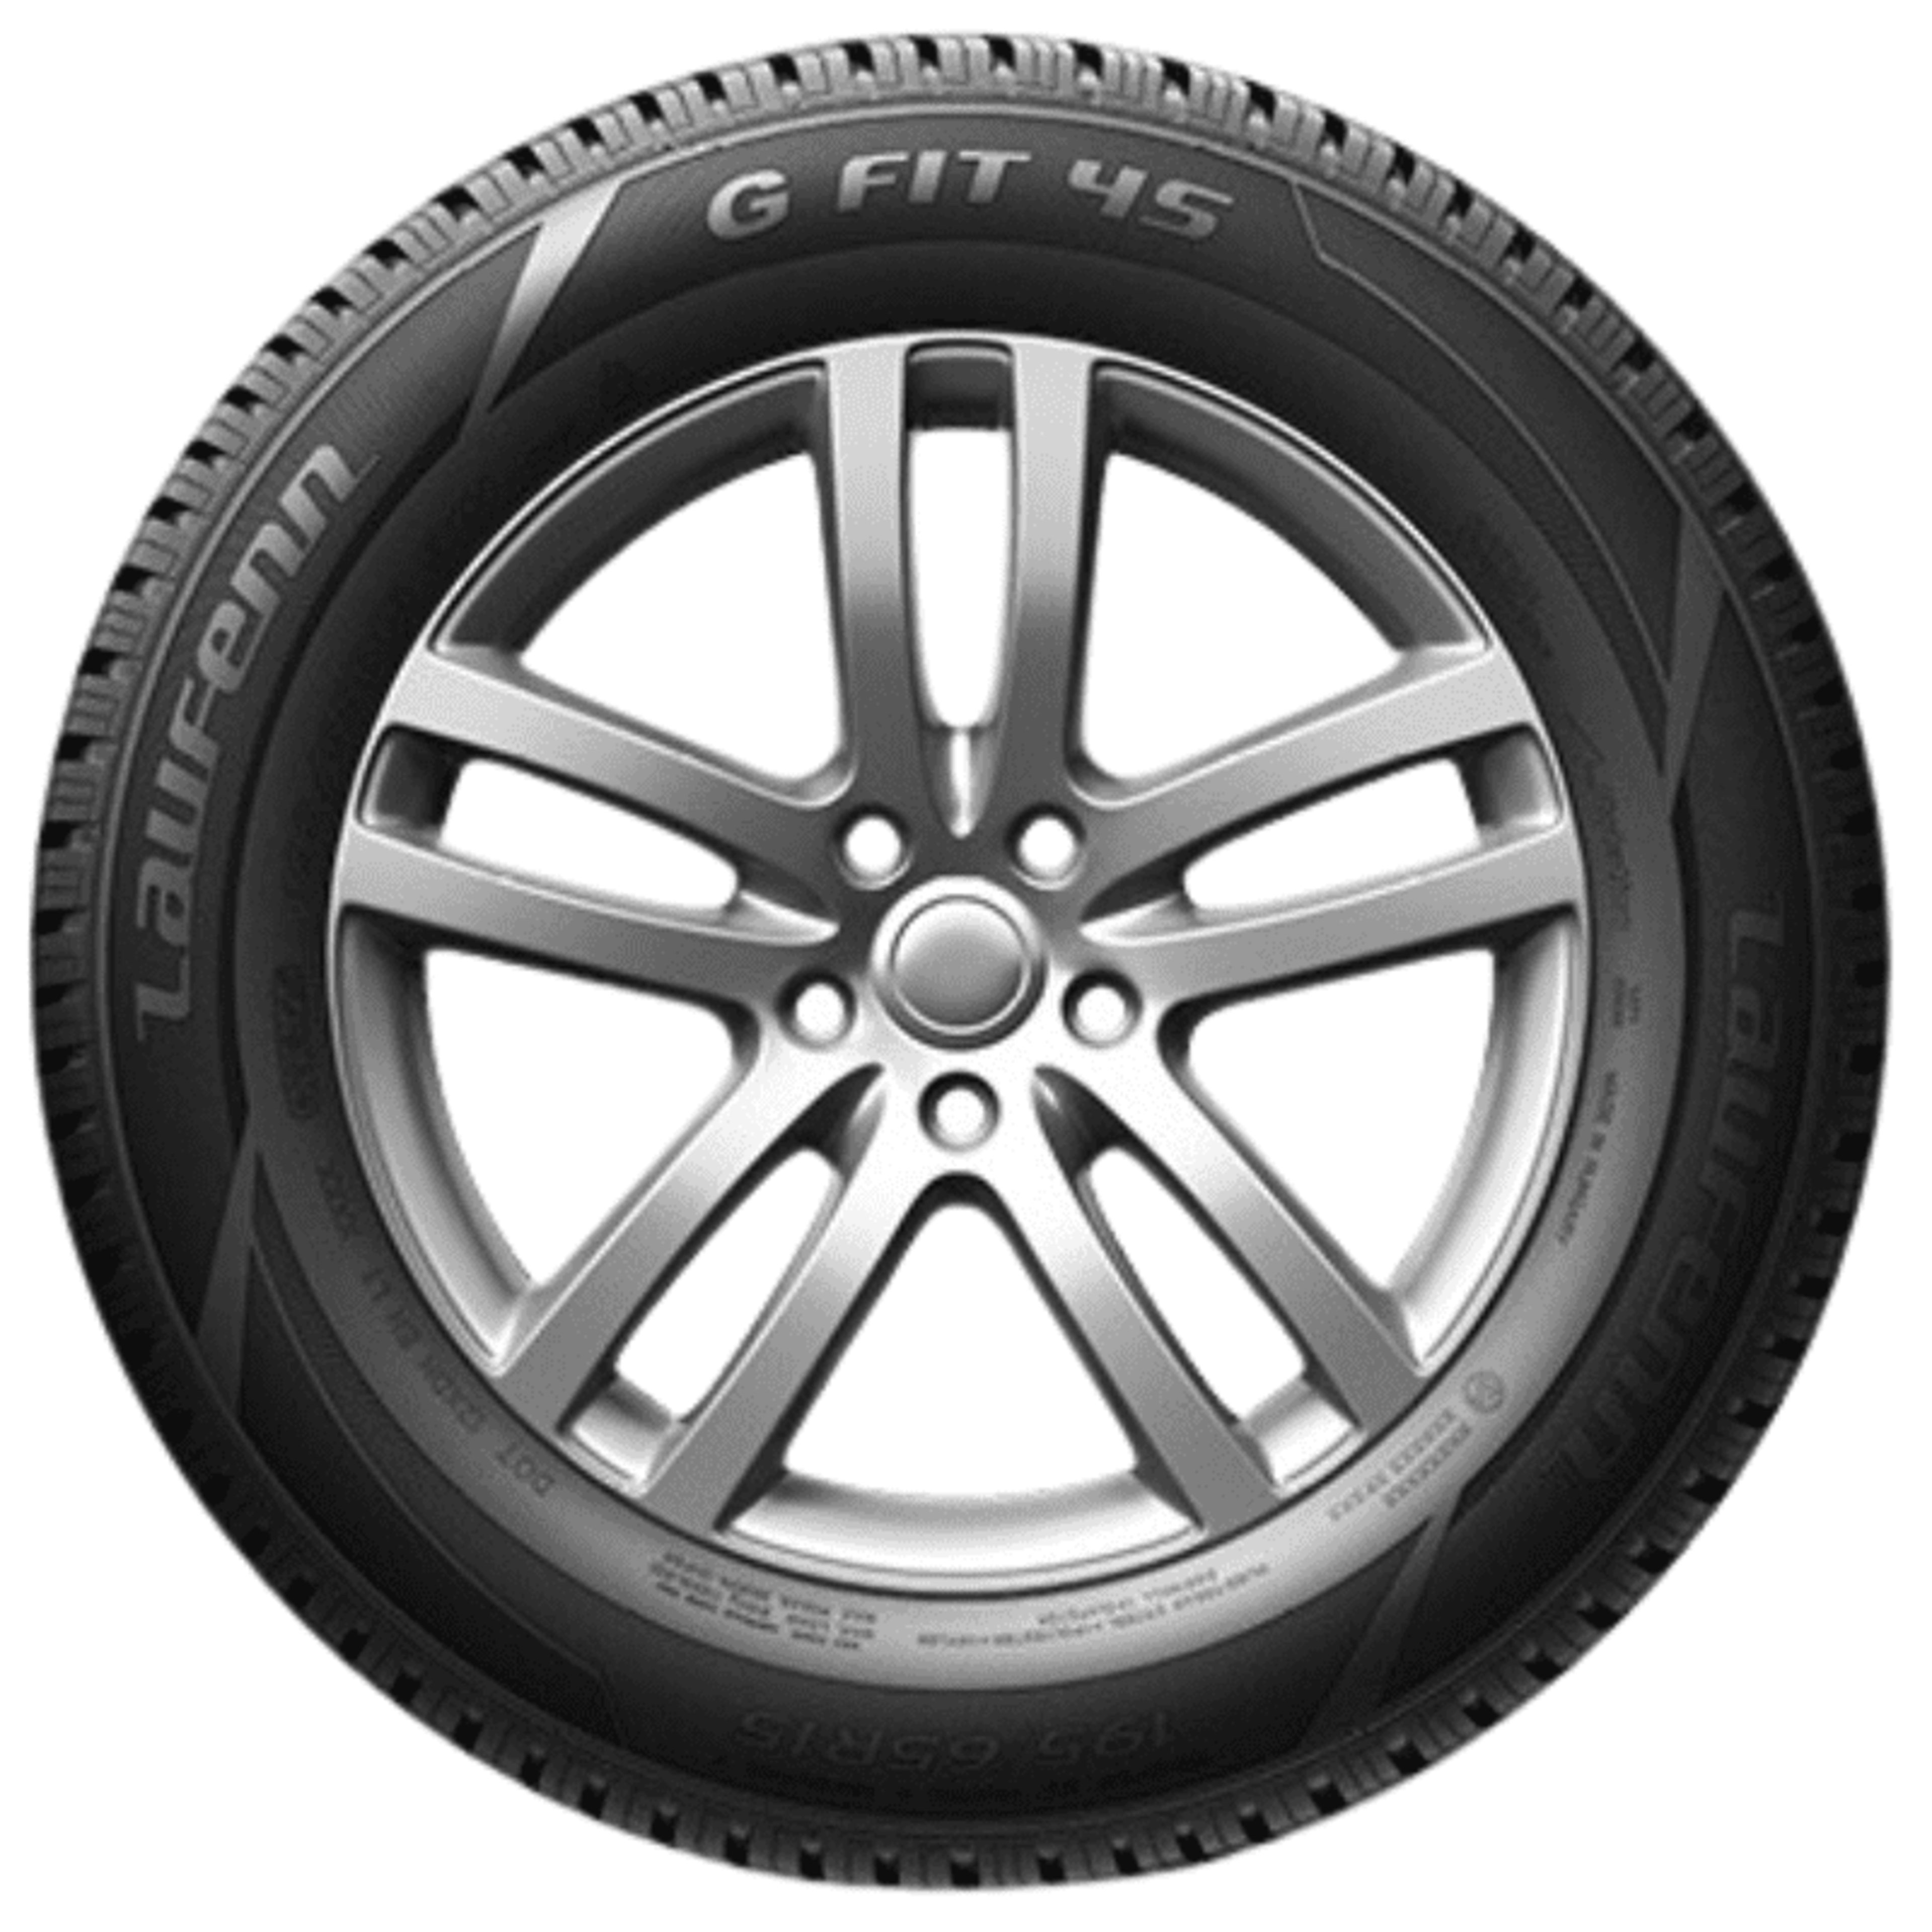 Buy Laufenn G FIT 4S Tires Online | SimpleTire